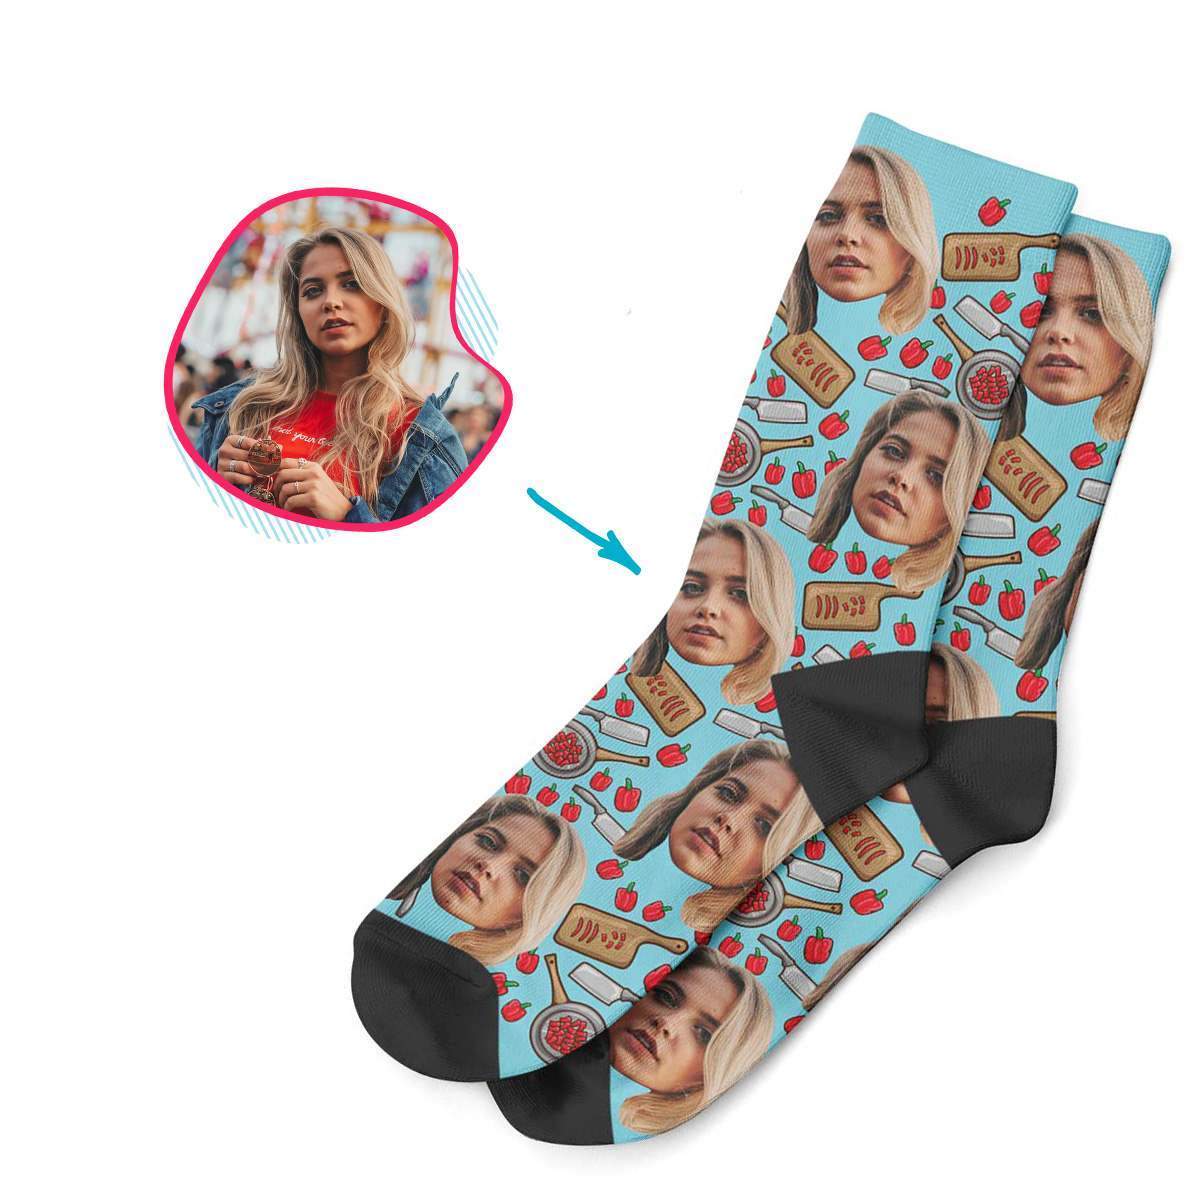 Сooking Personalized Socks